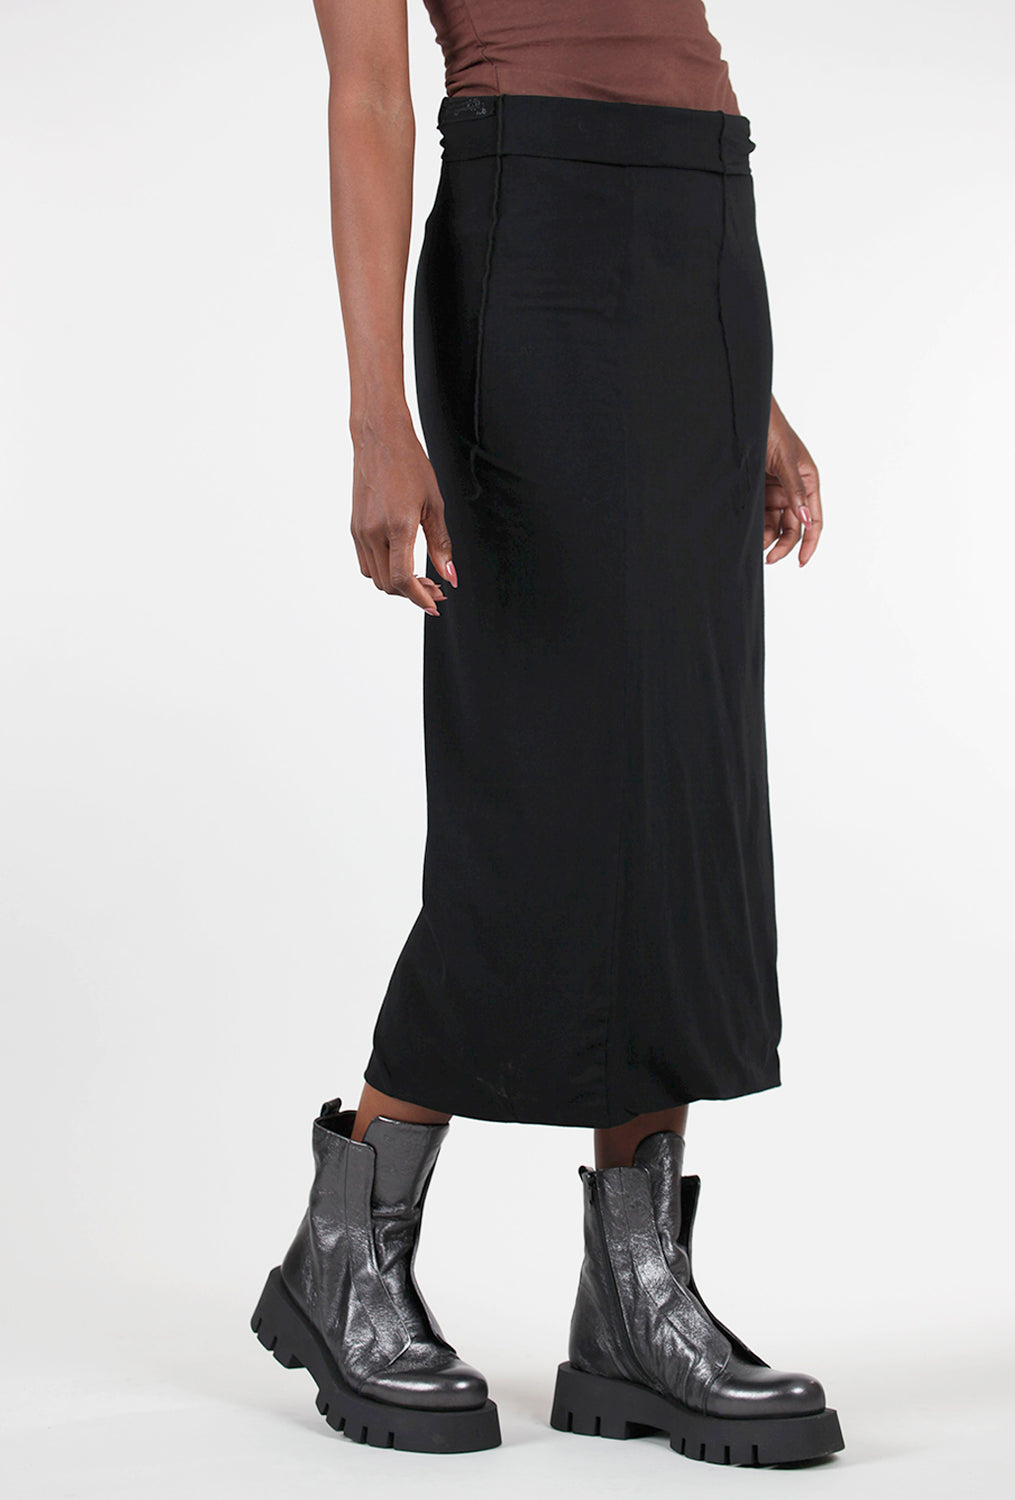 Rundholz Dimensional Seam Slim Skirt, Black 